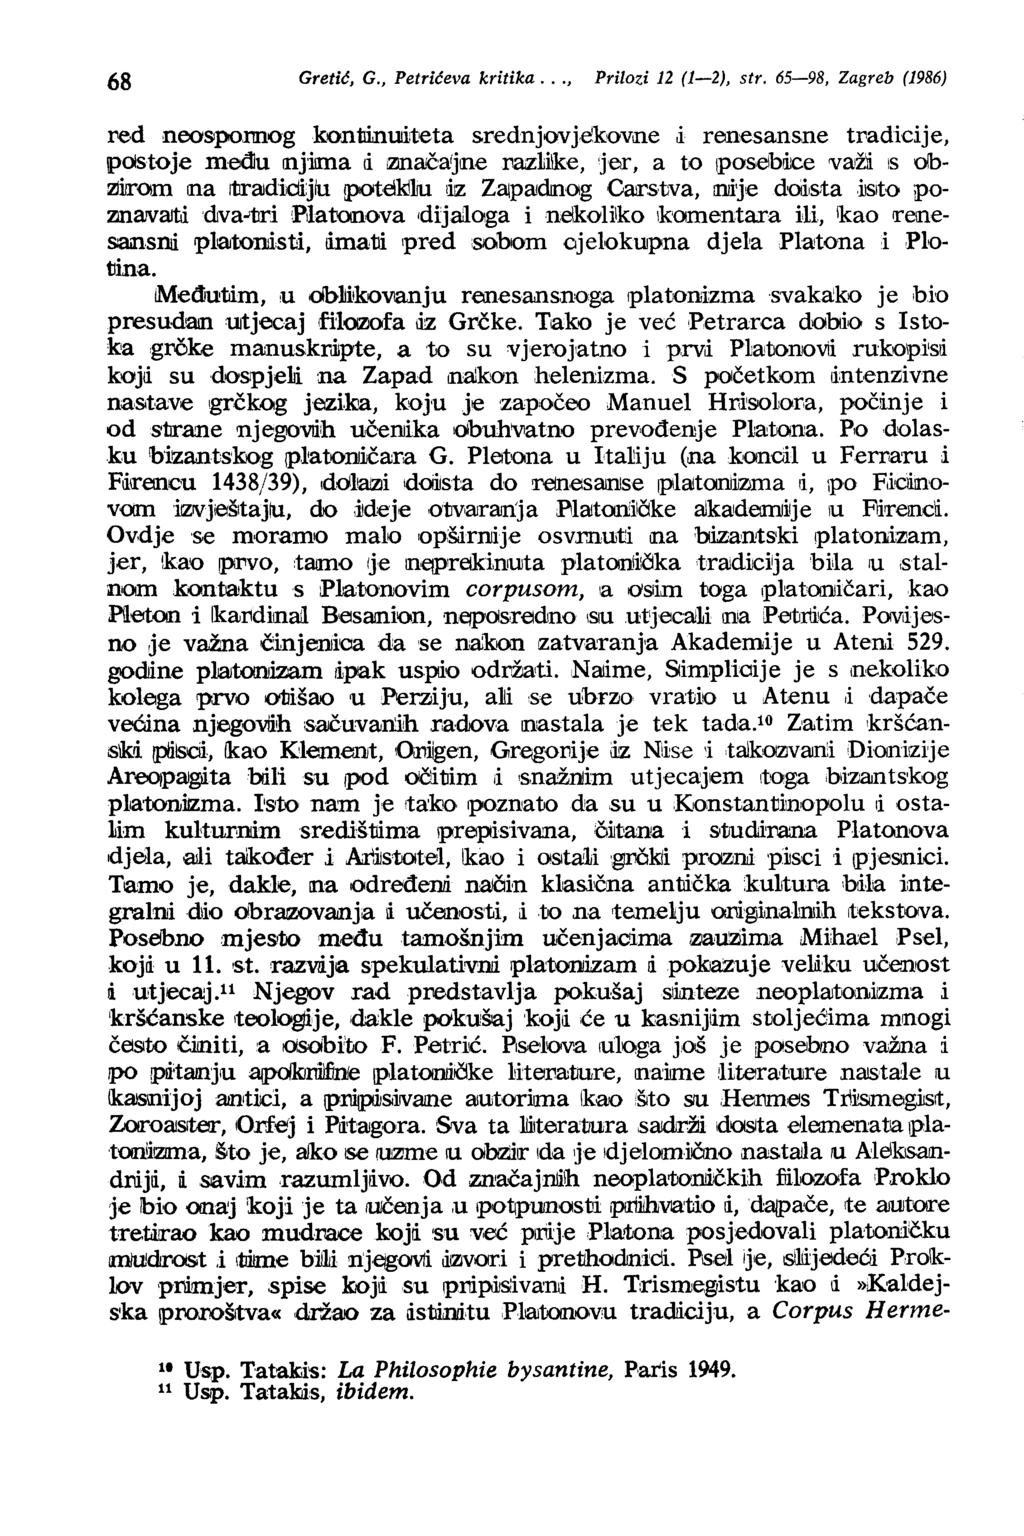 68 Gretić, G., Petrićeva kritika..., Prilozi 12 (1-2), str. 65-98, Zagreb (1986) red noospormog kon1linudrbeta srednjovje'.~ovne,i renesansne tr.